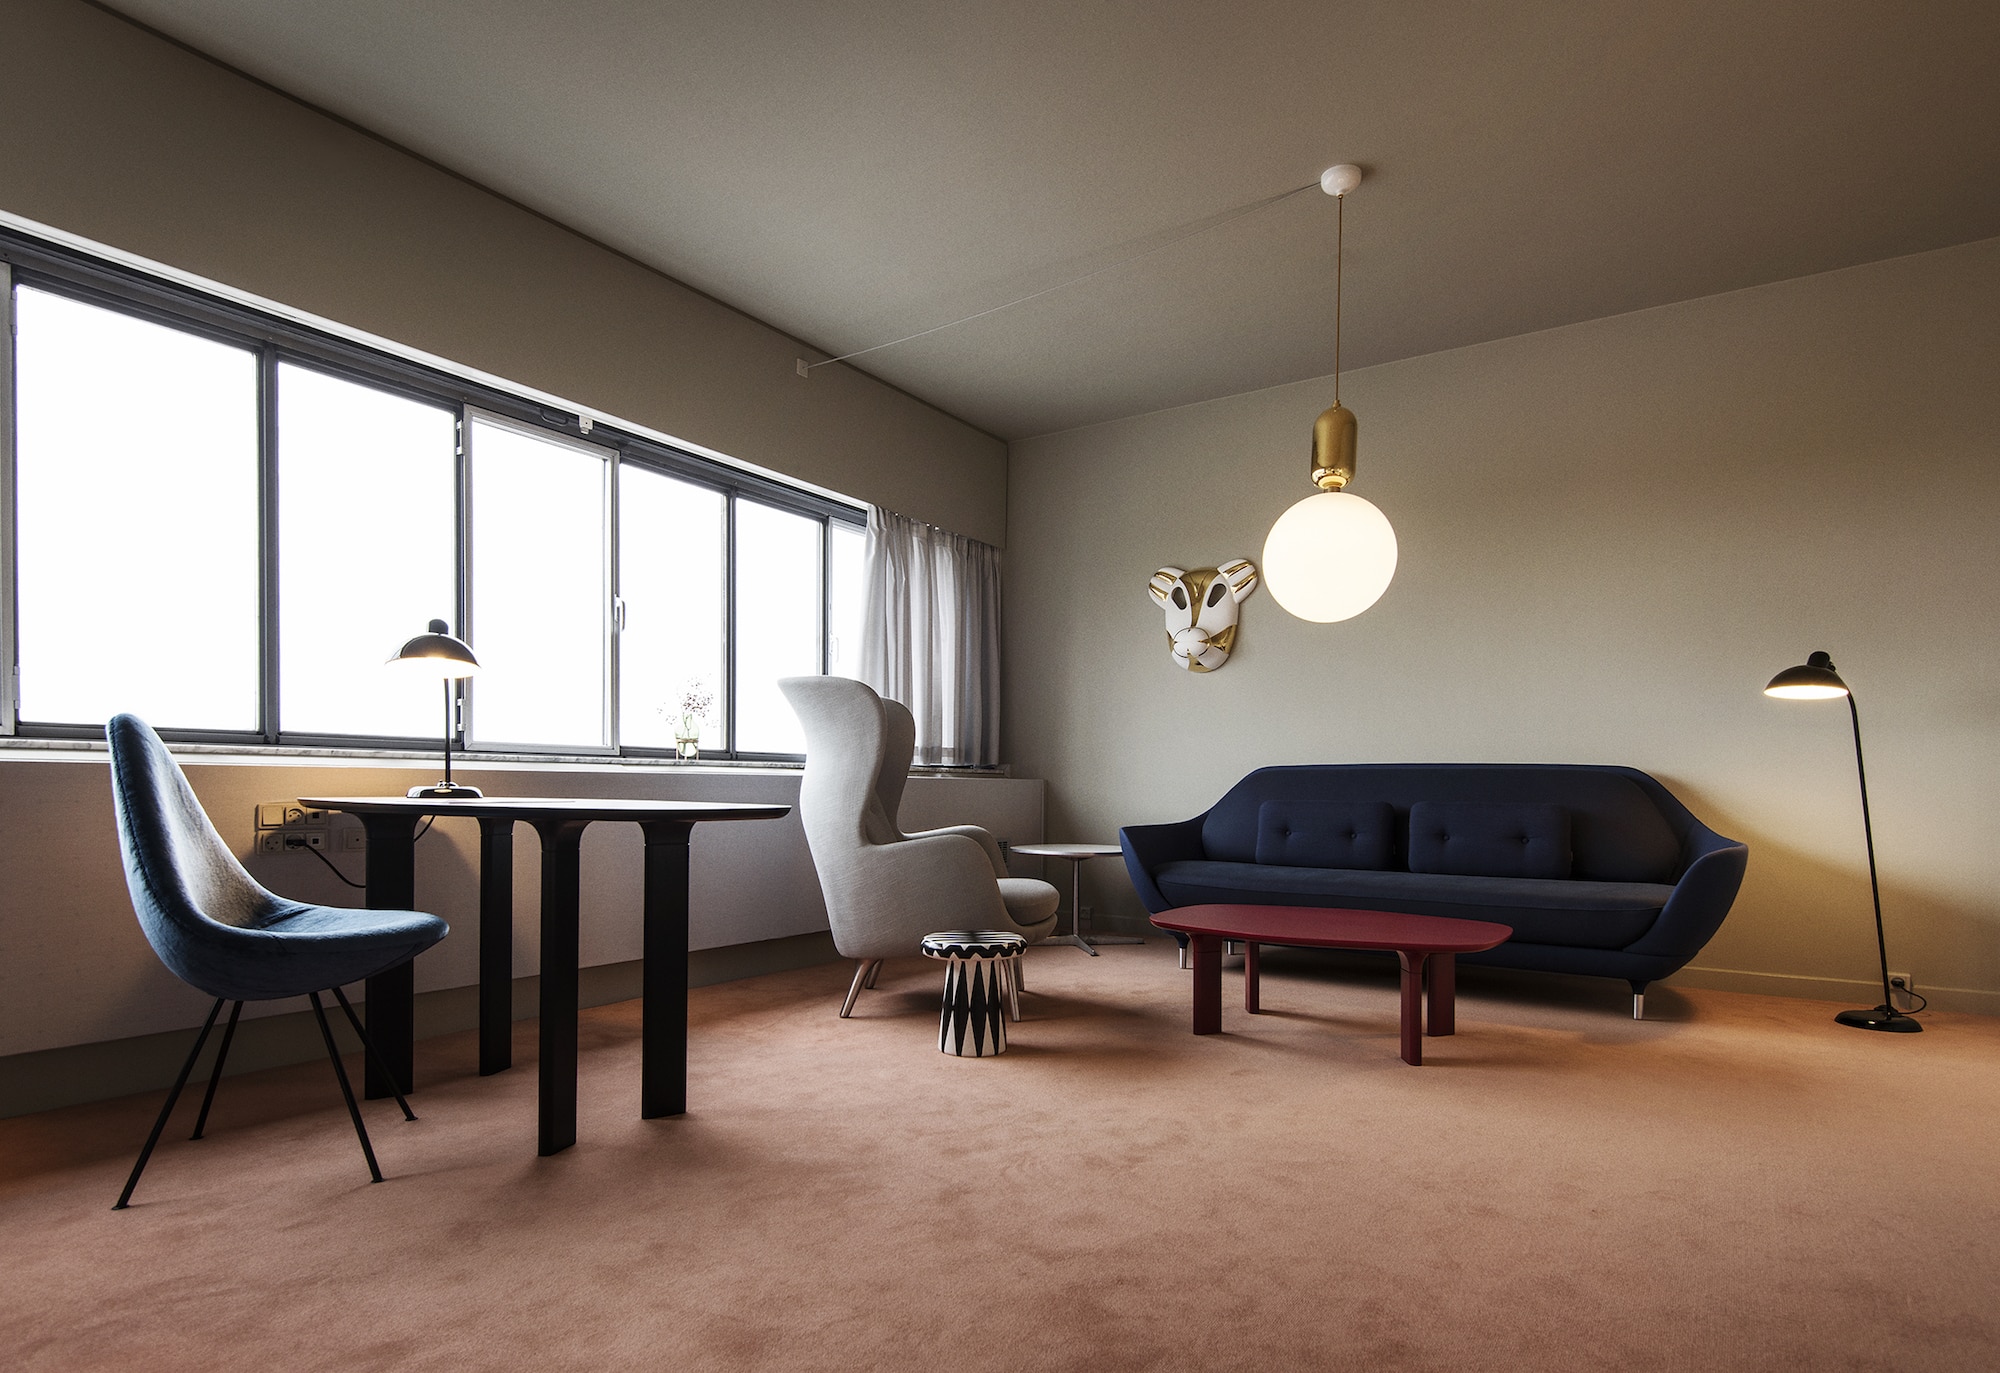 Room 506, designed by Jaime Hayon, at the Radisson Blu Royal Hotel in Copenhagen